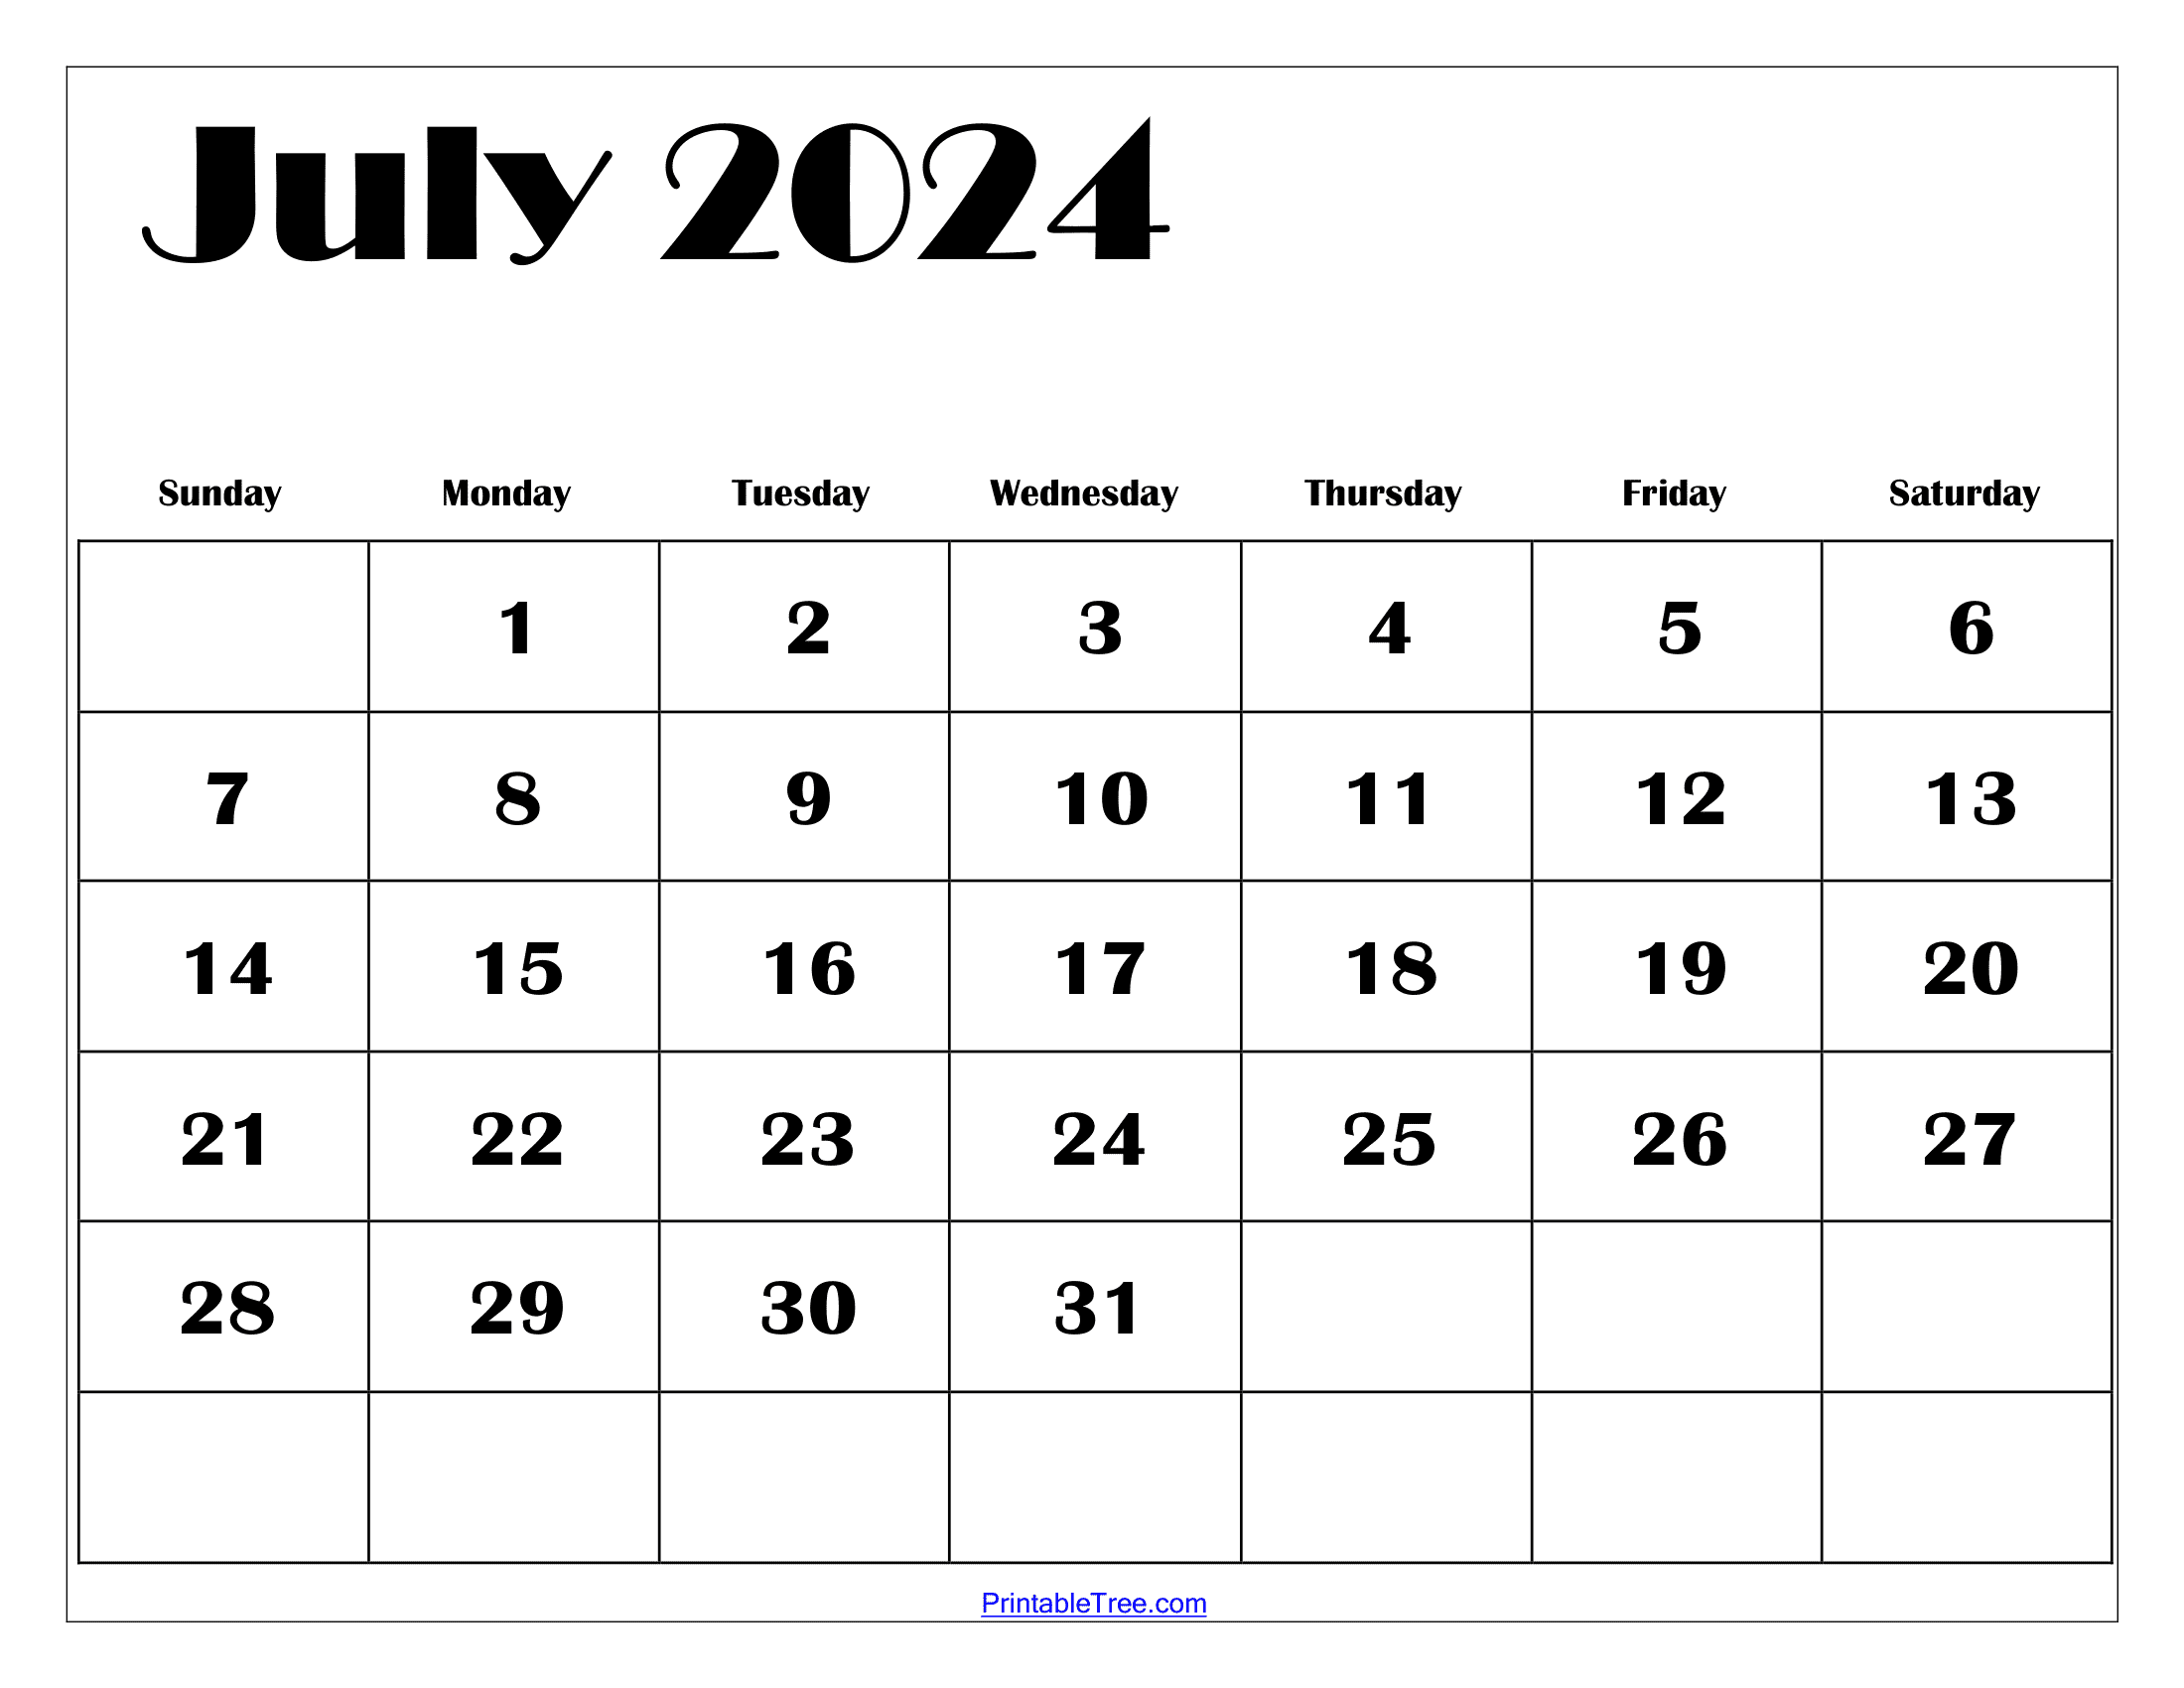 July 2024 Calendar Printable Pdf With Holidays Free Template for July 2024 Weekly Calendar Printable